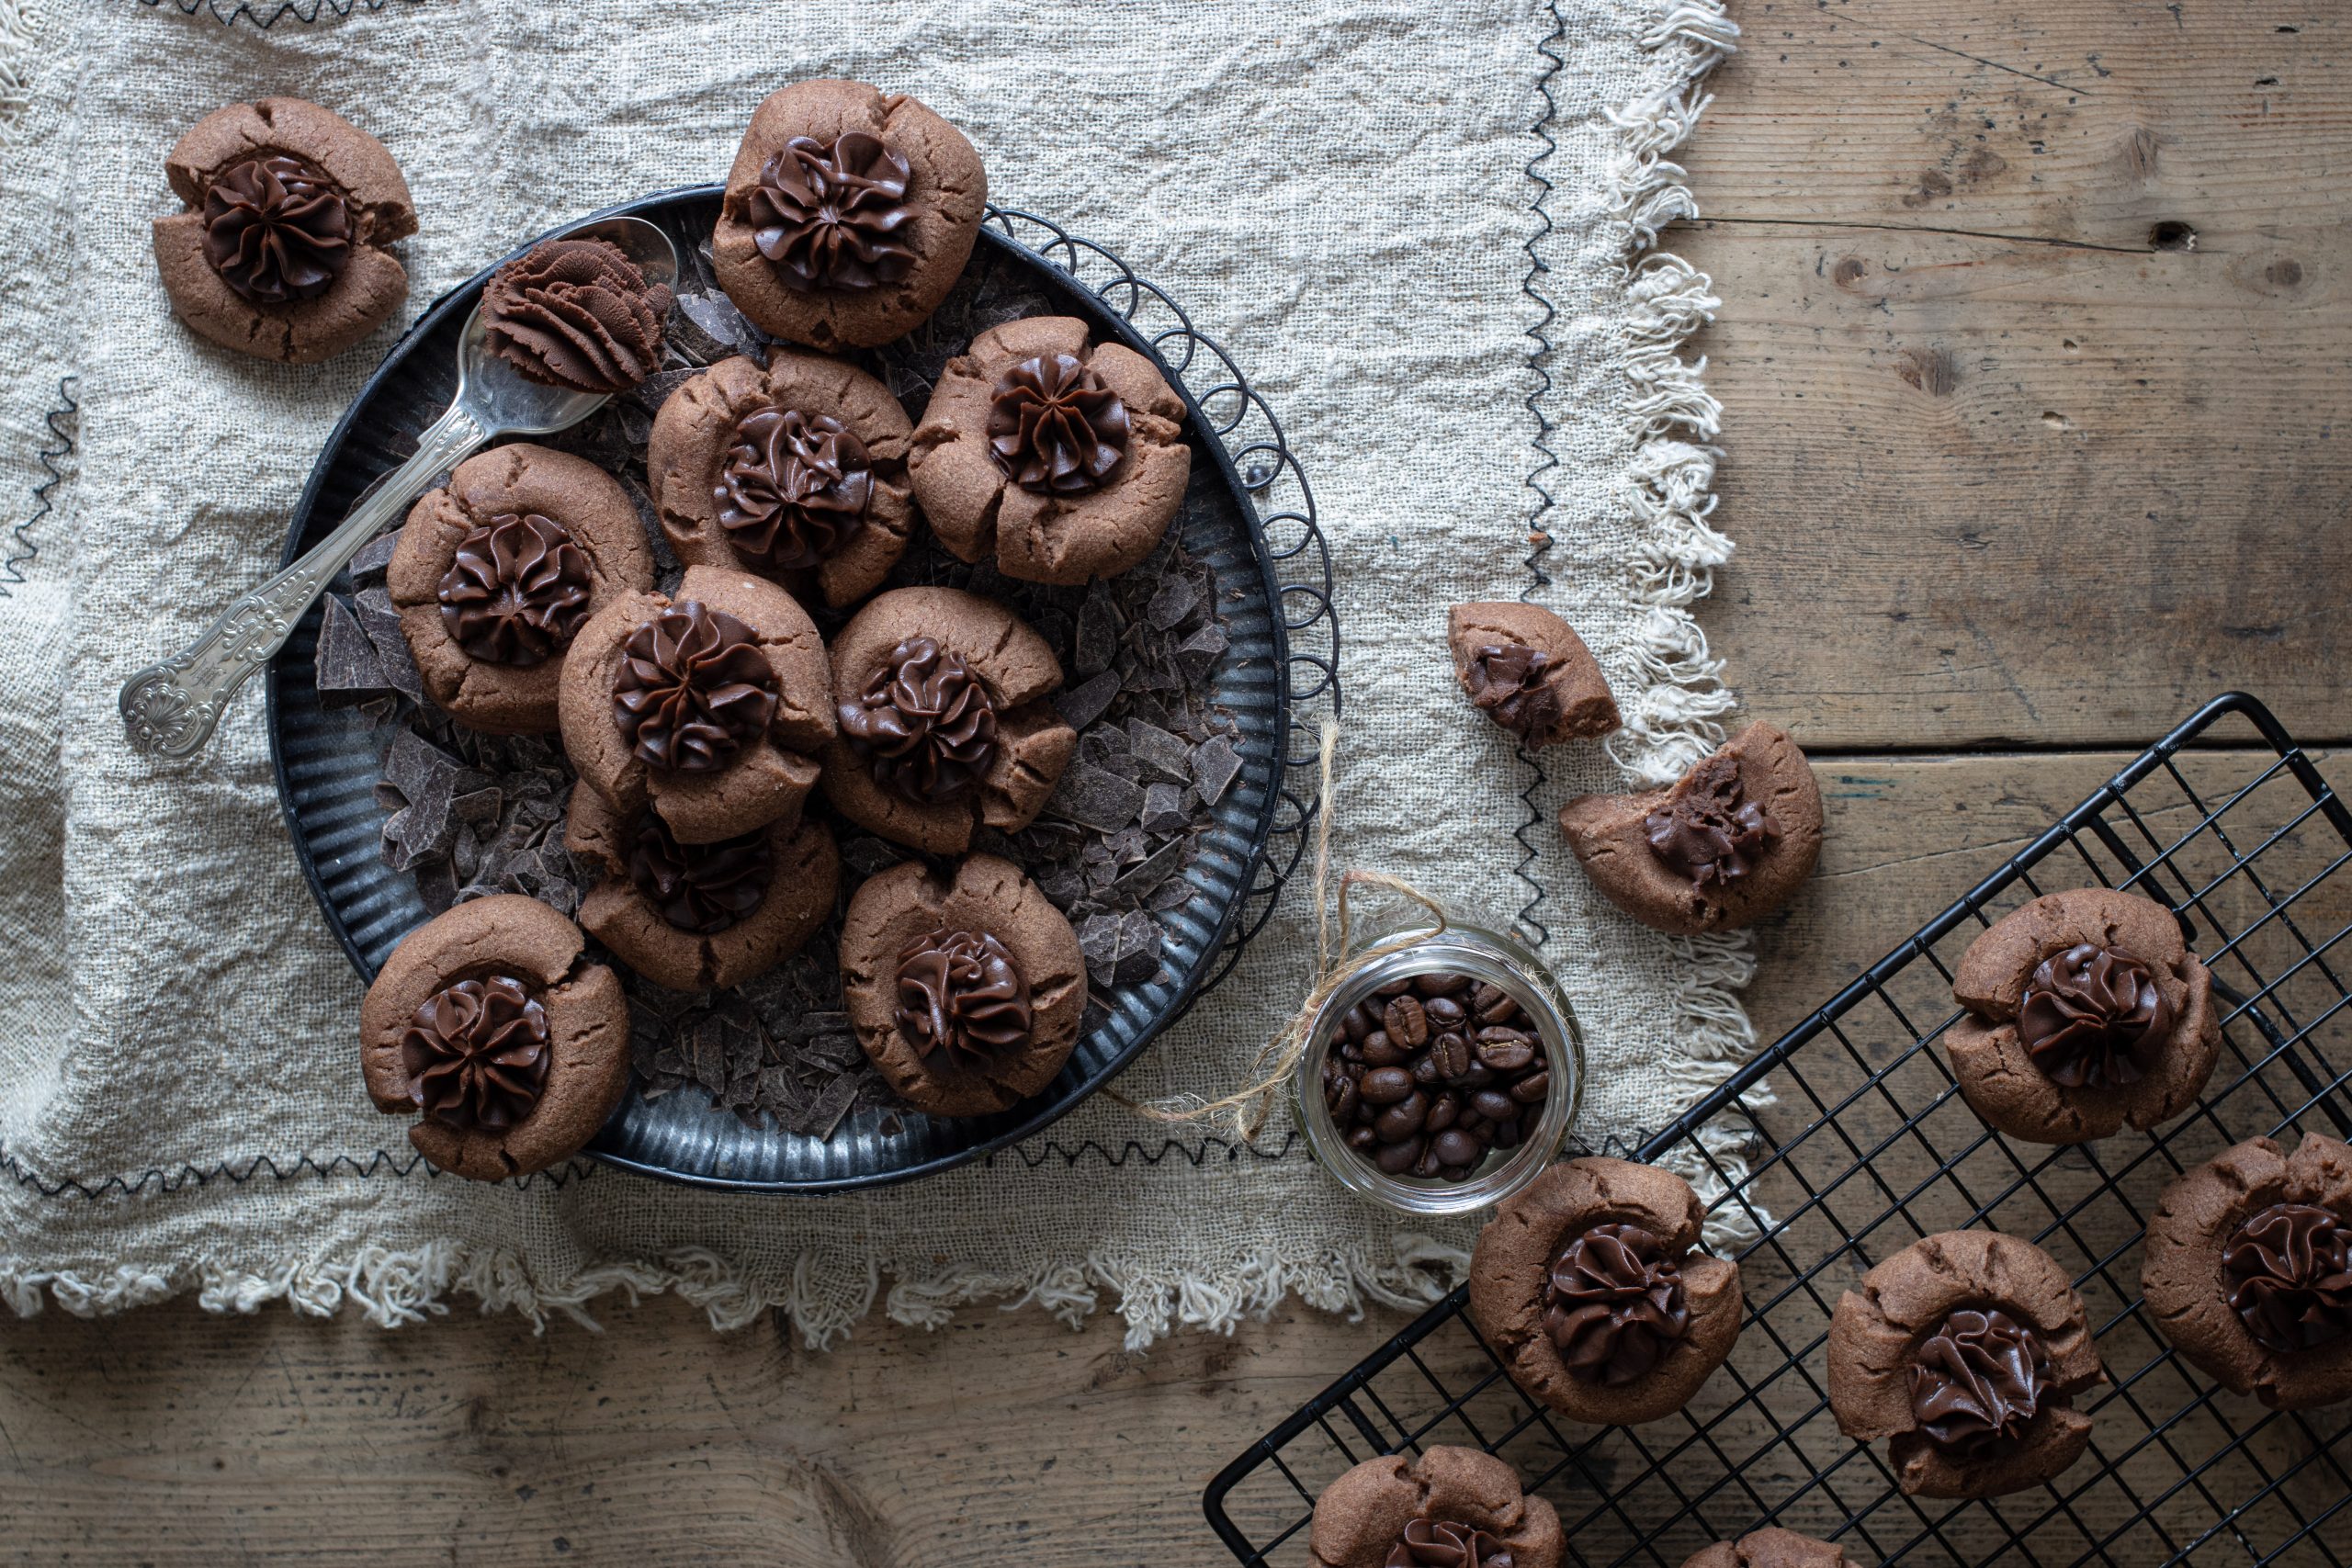 Thumbprint cookies cioccolato e caffè